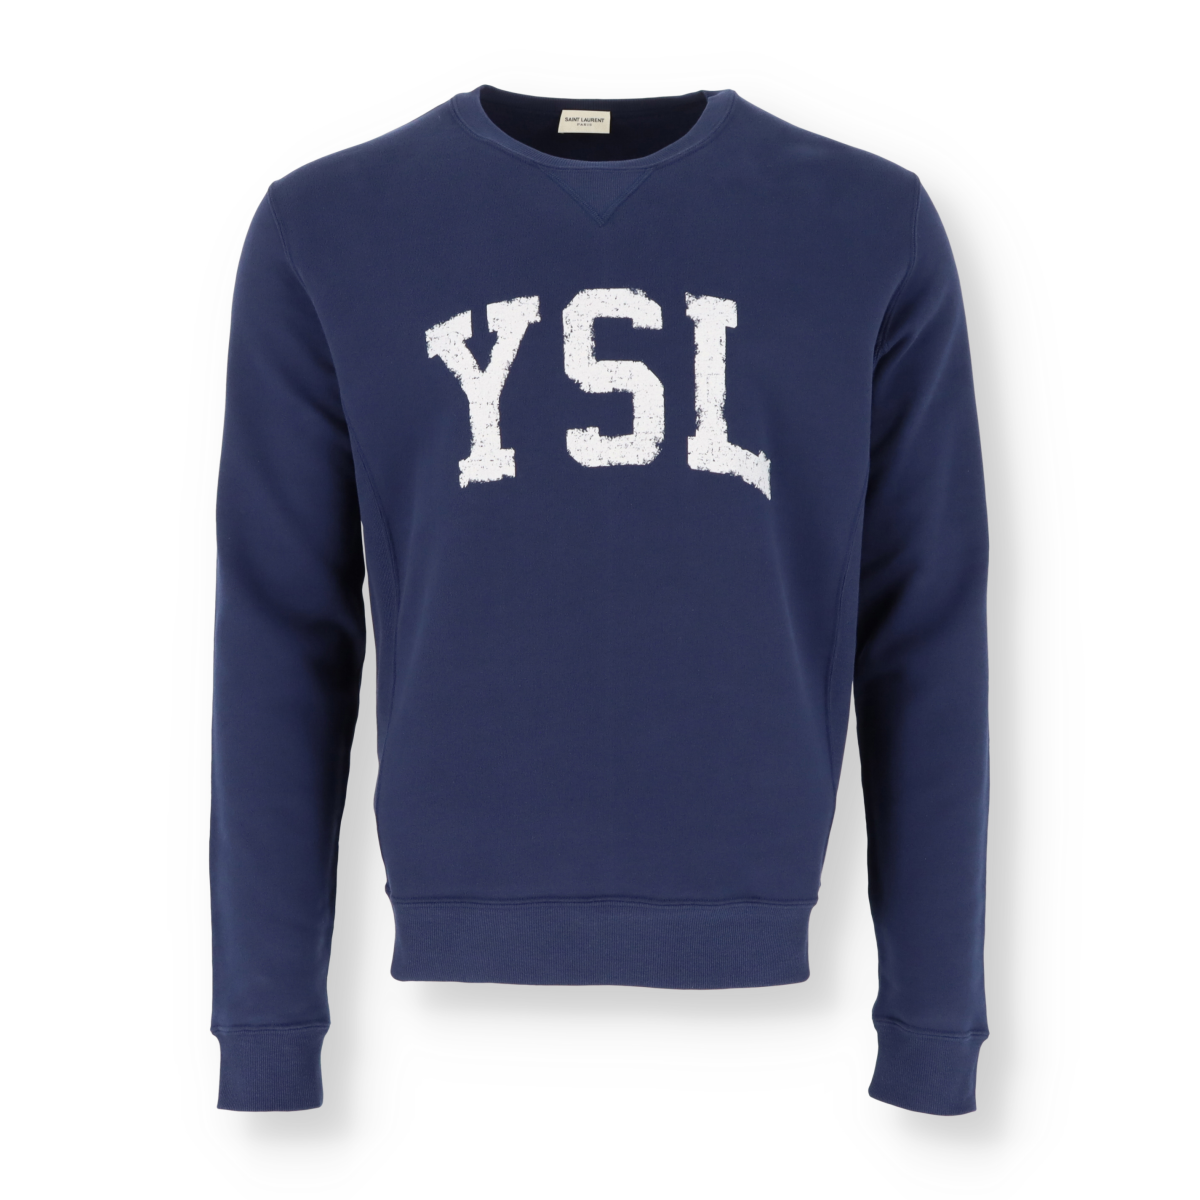 Saint Laurent YSL Sweatshirt